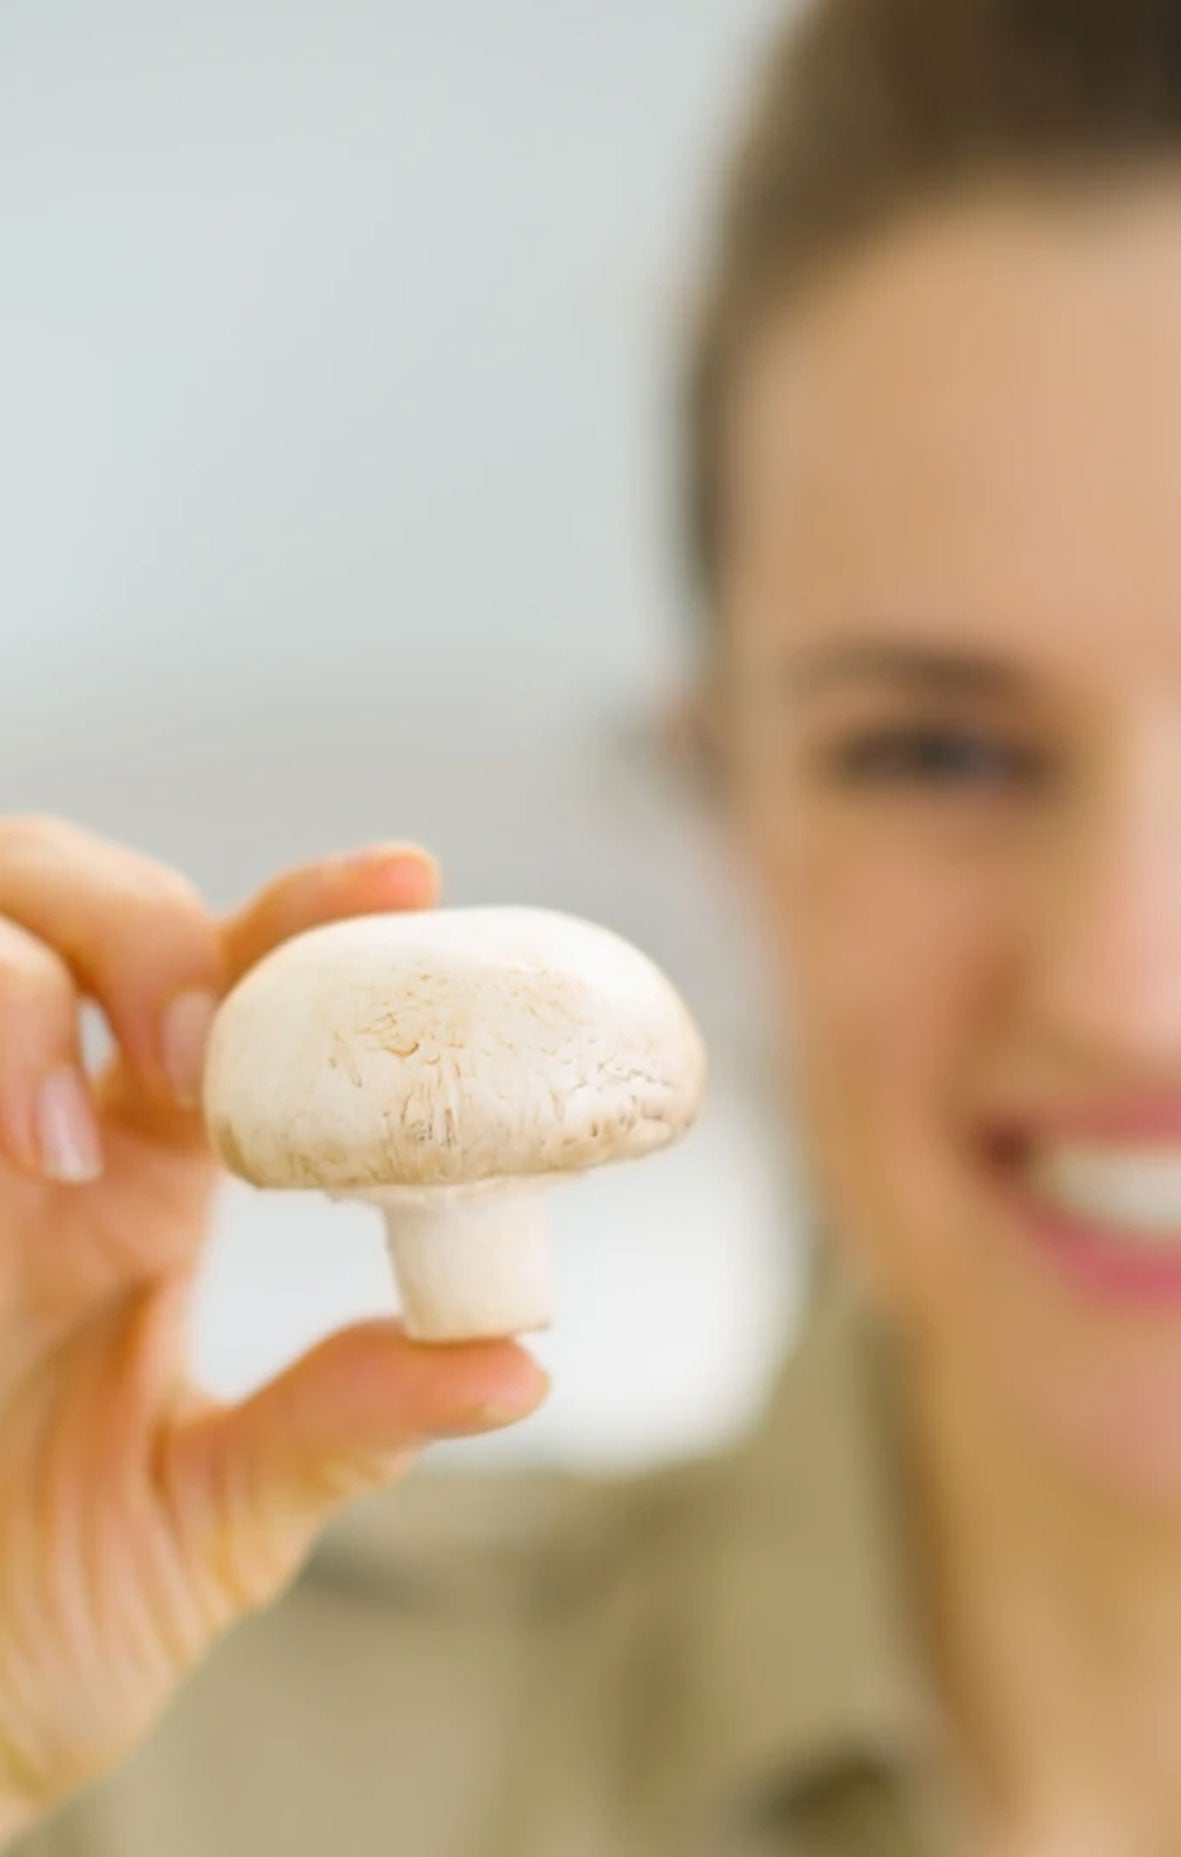 Mushrooms and Skincare? Seriously?